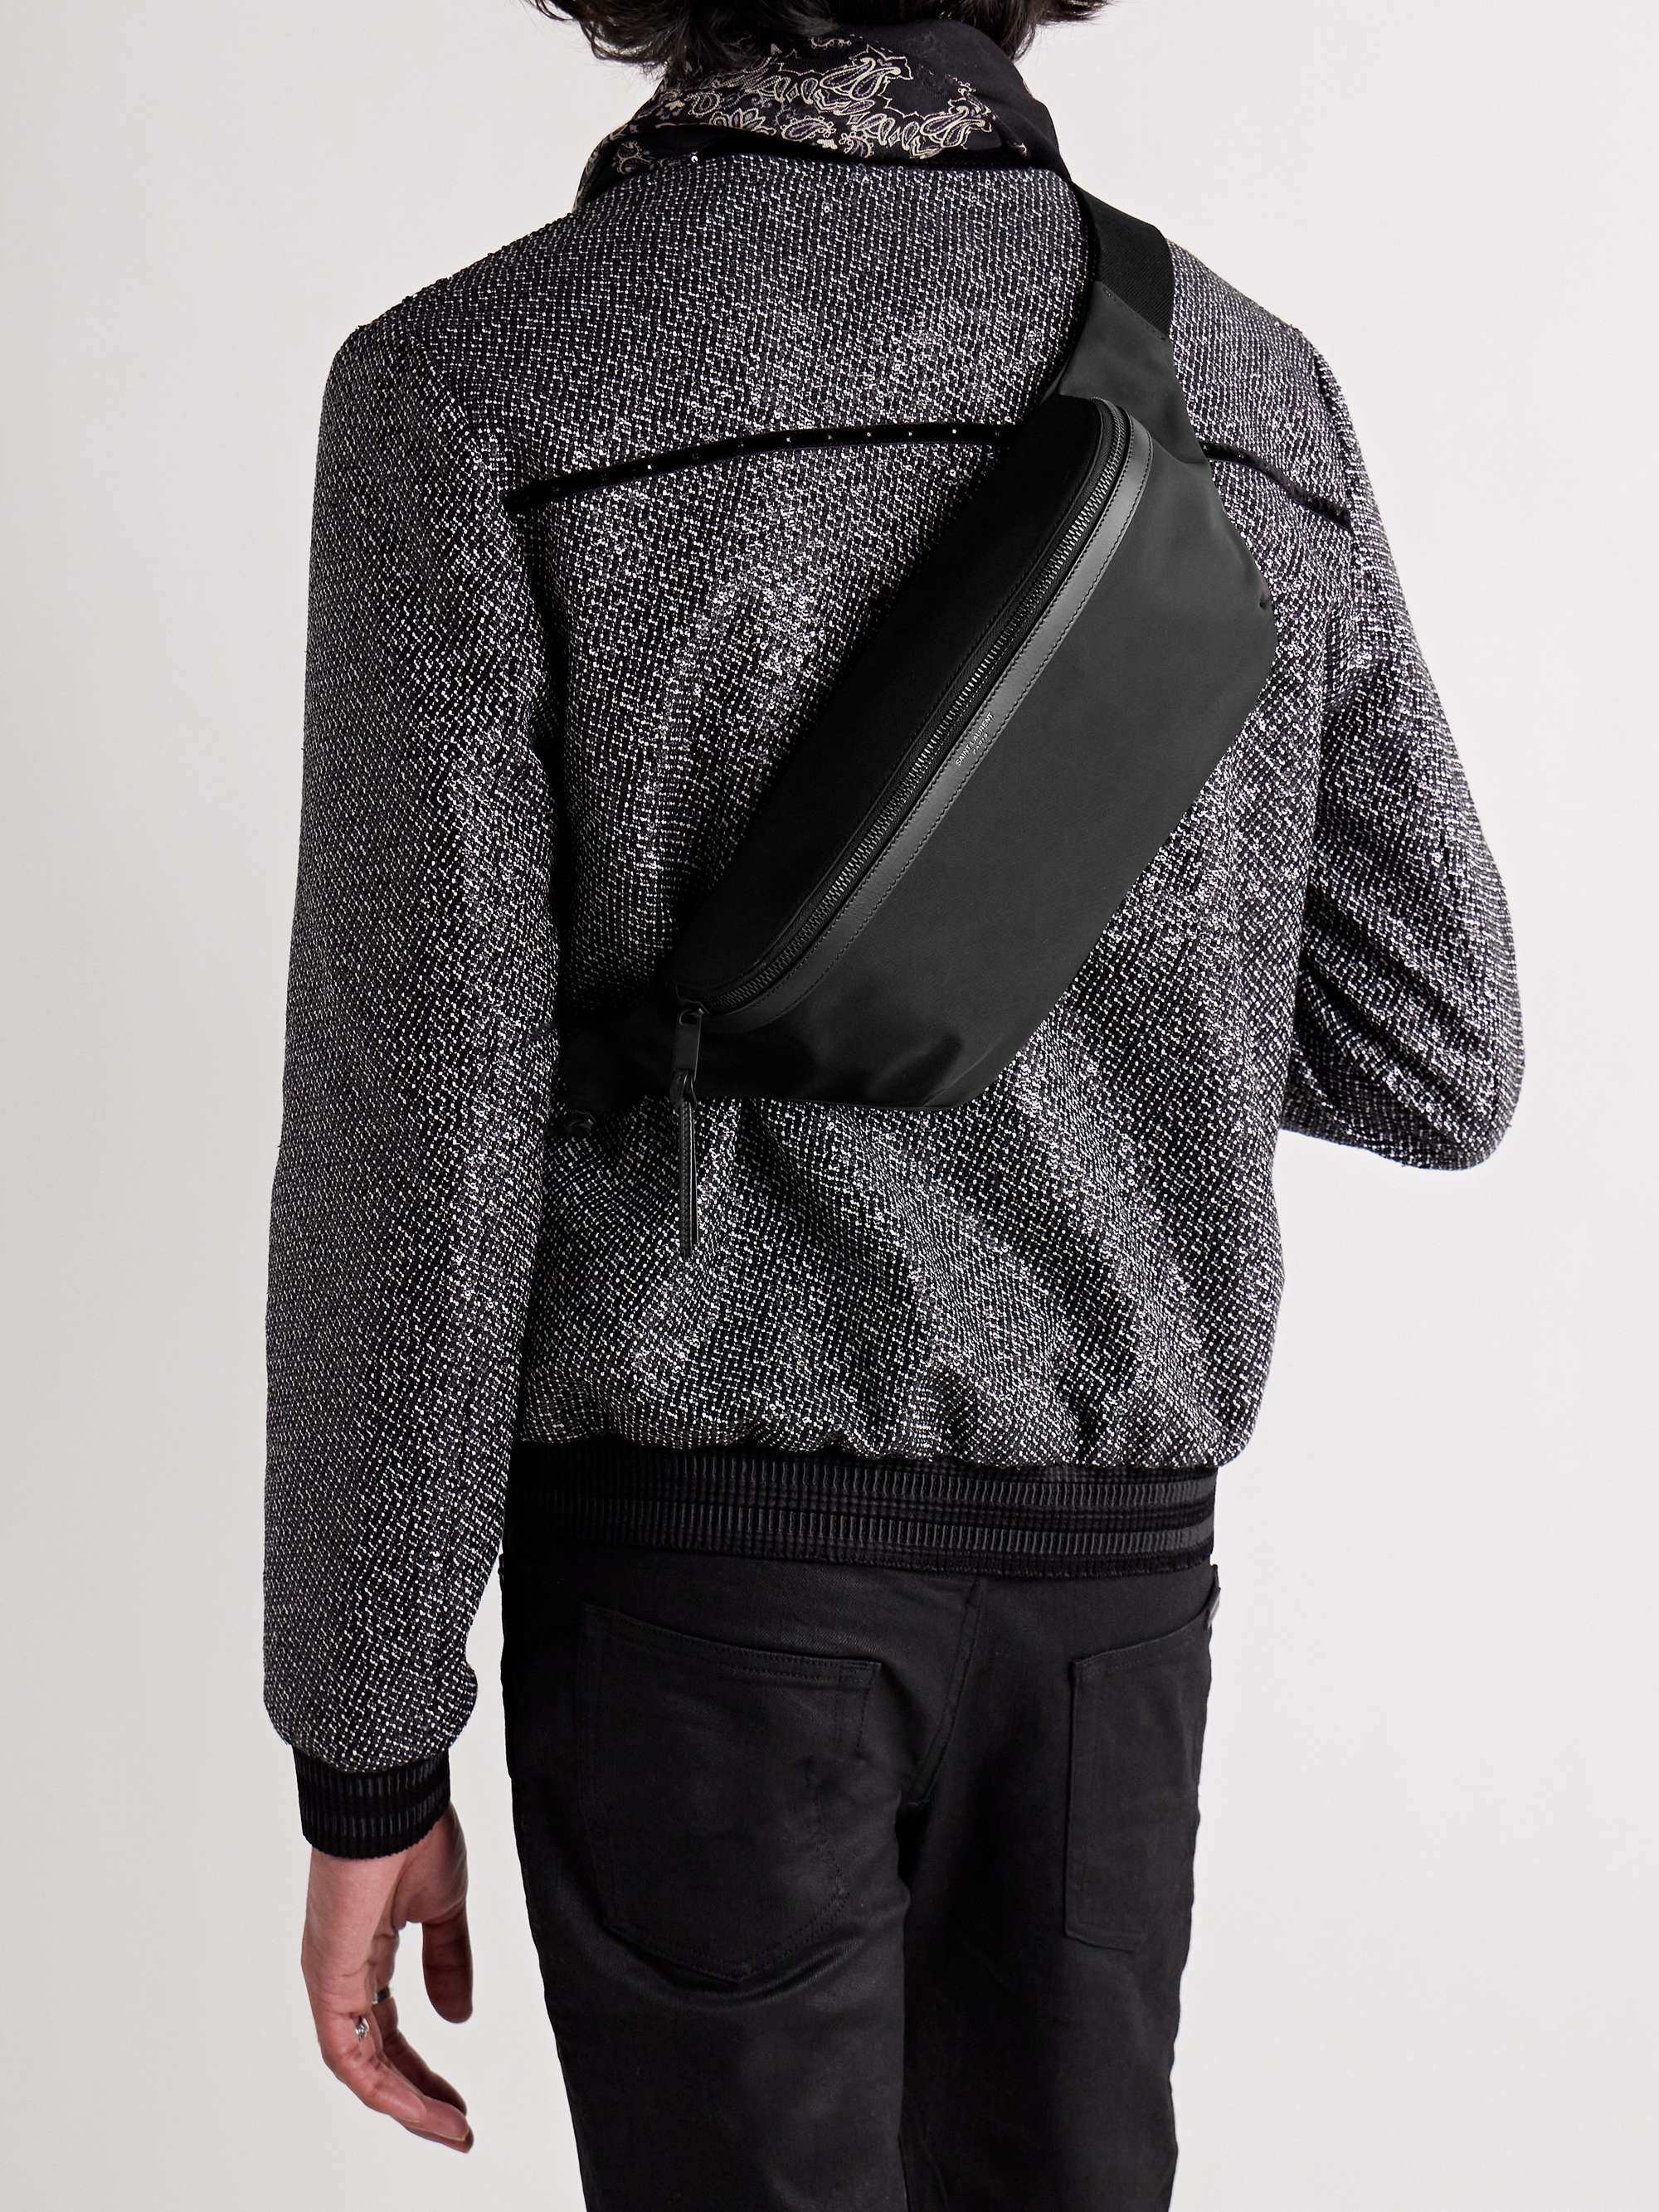 SAINT LAURENT Leather-Trimmed Nylon Belt Bag for Men | MR PORTER